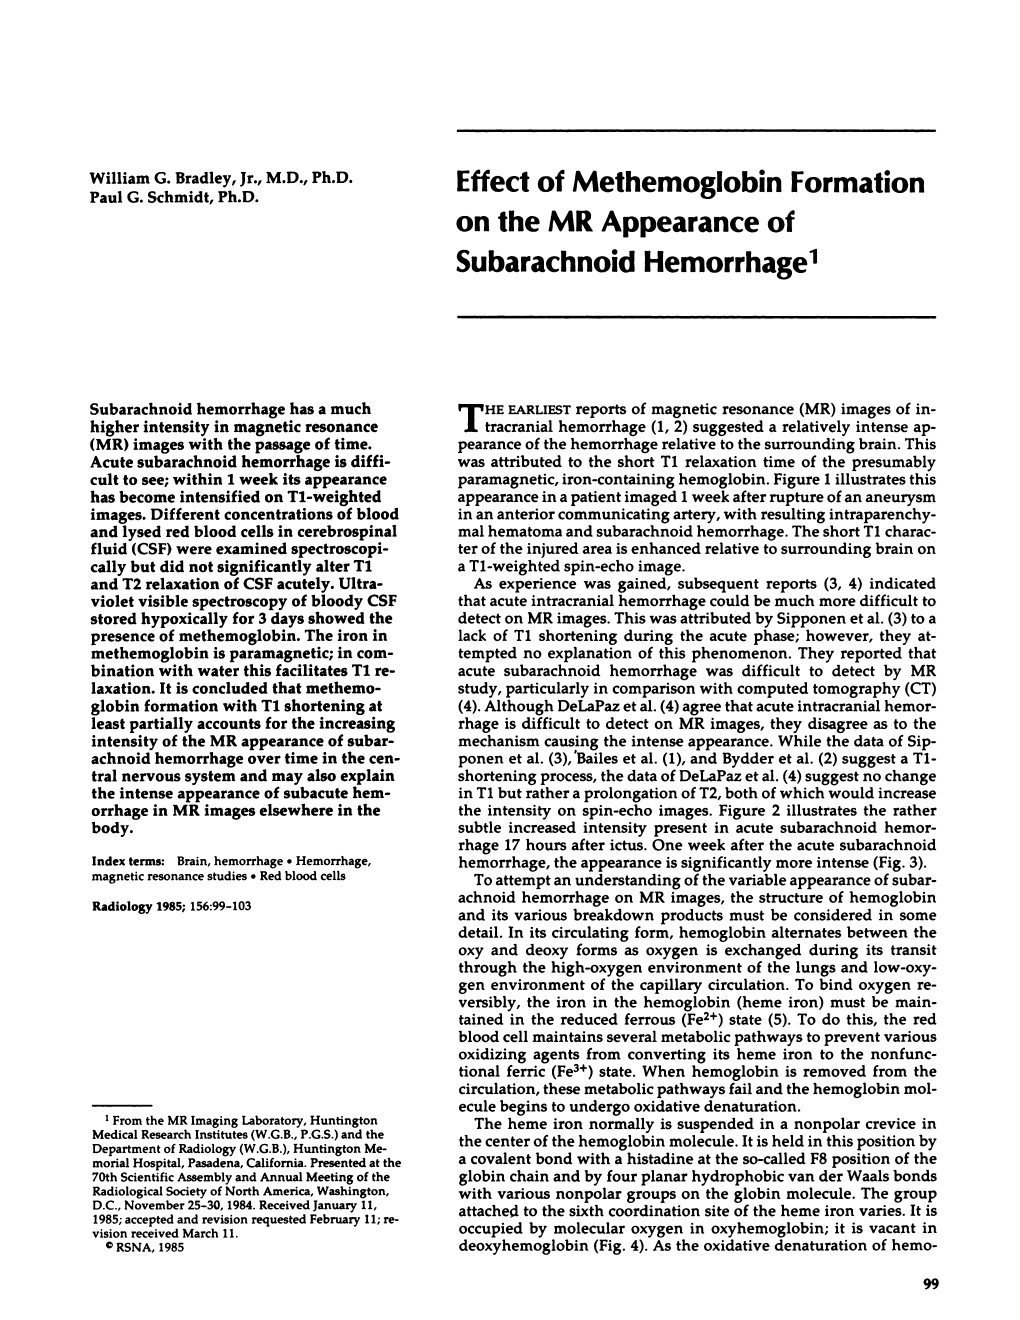 Effect of Methemoglobin Formation on the MR Appearance of Subarachnoid Hemorrhage1